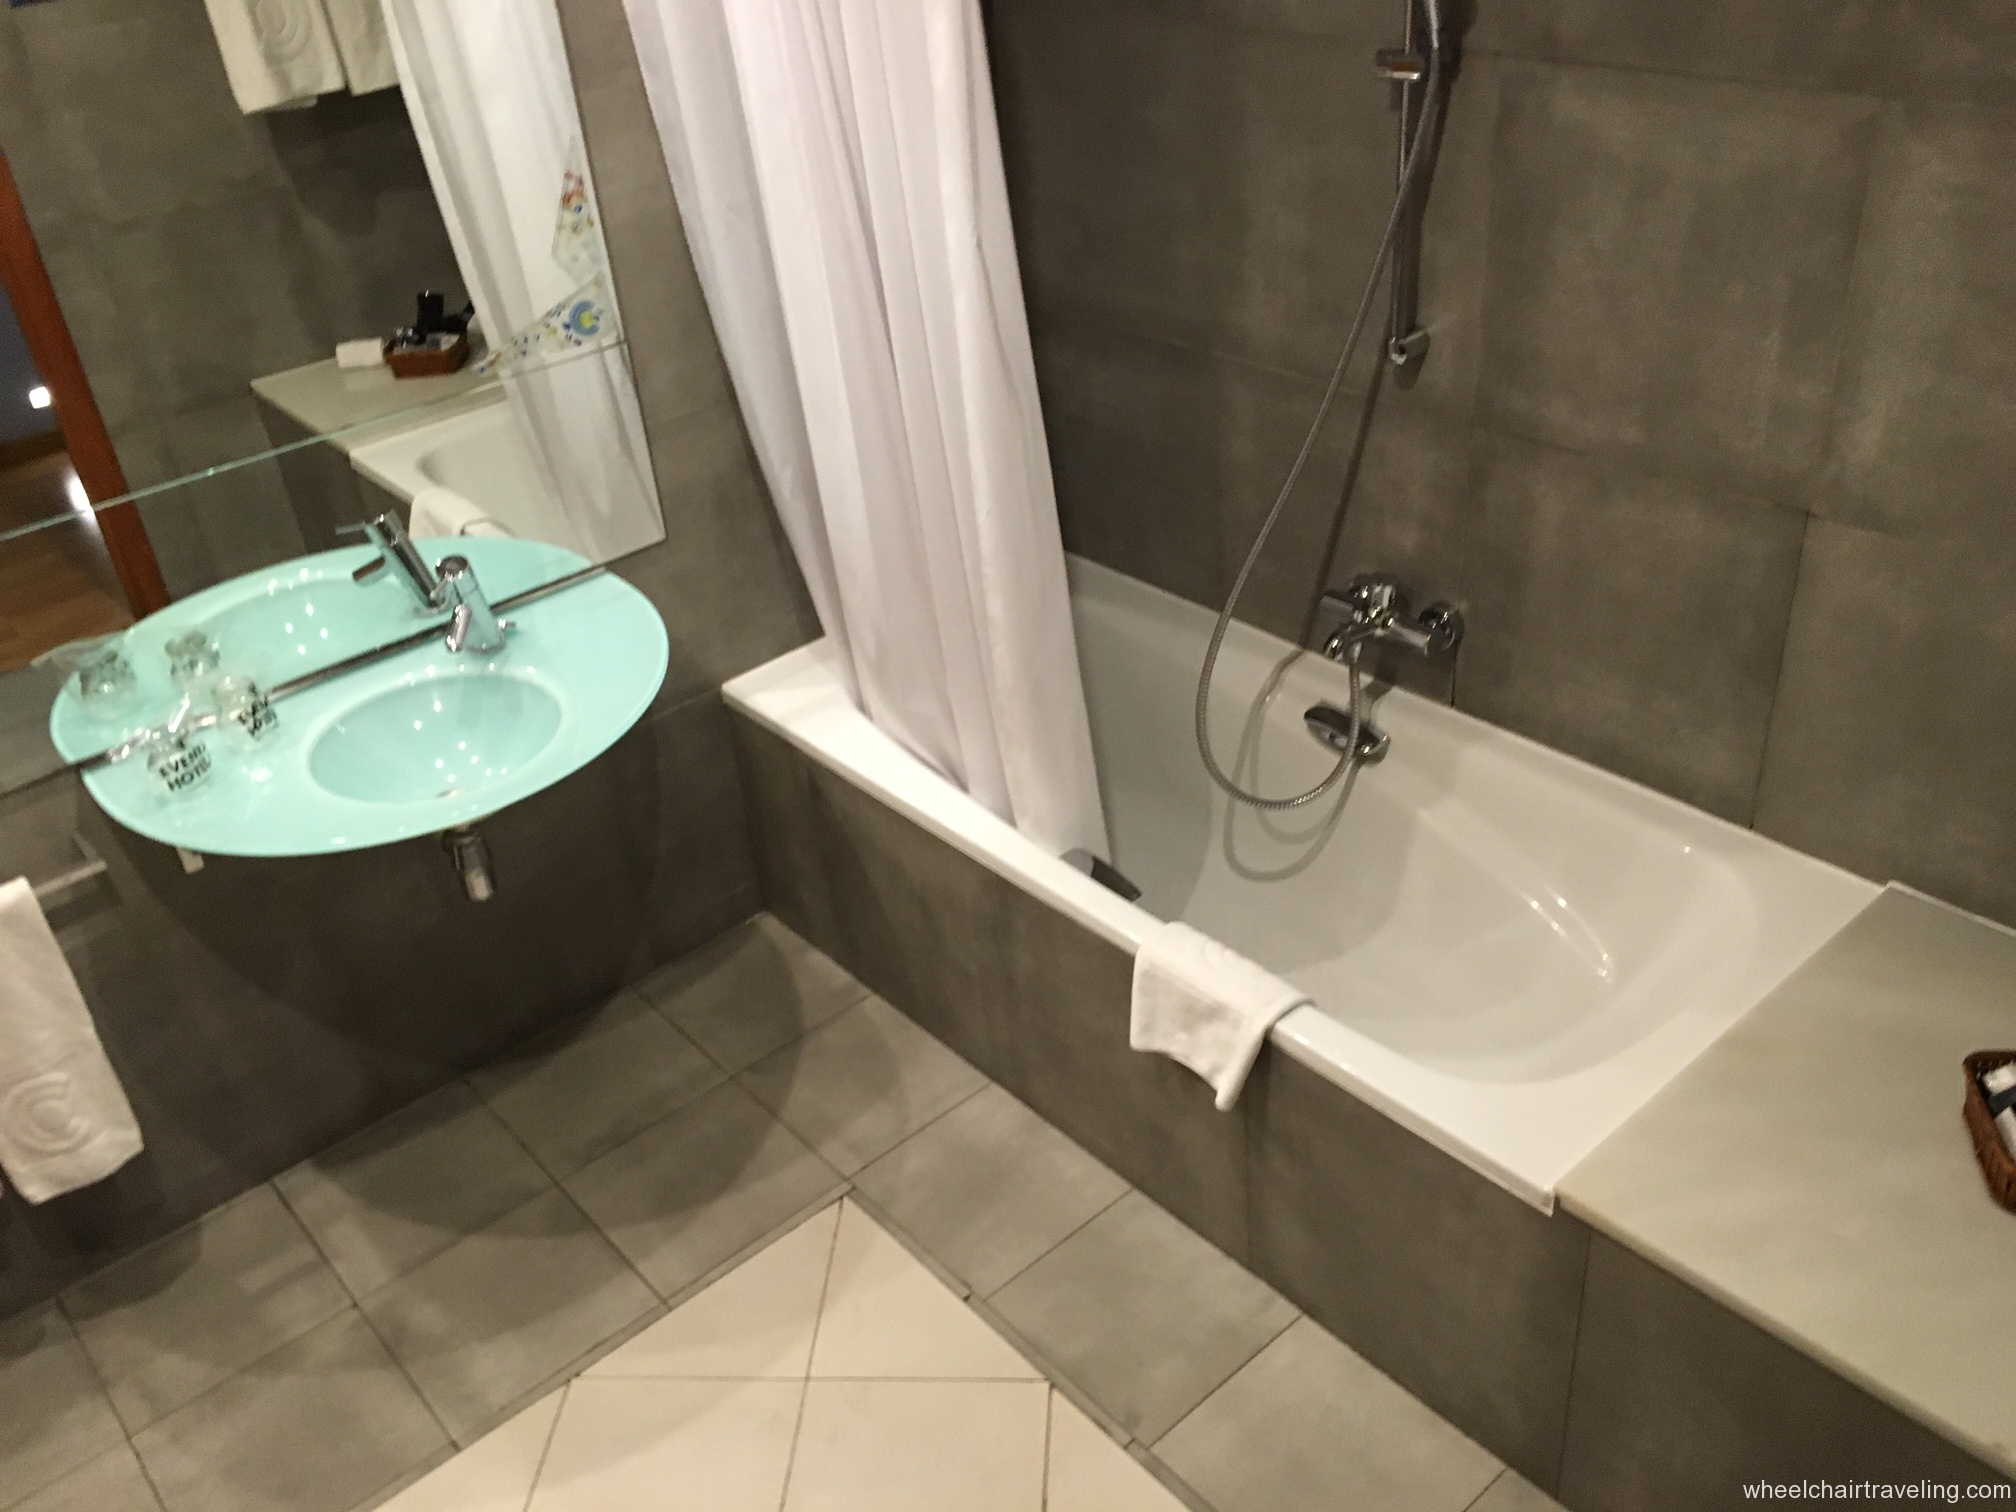 Barcelona hotel bathroom sink